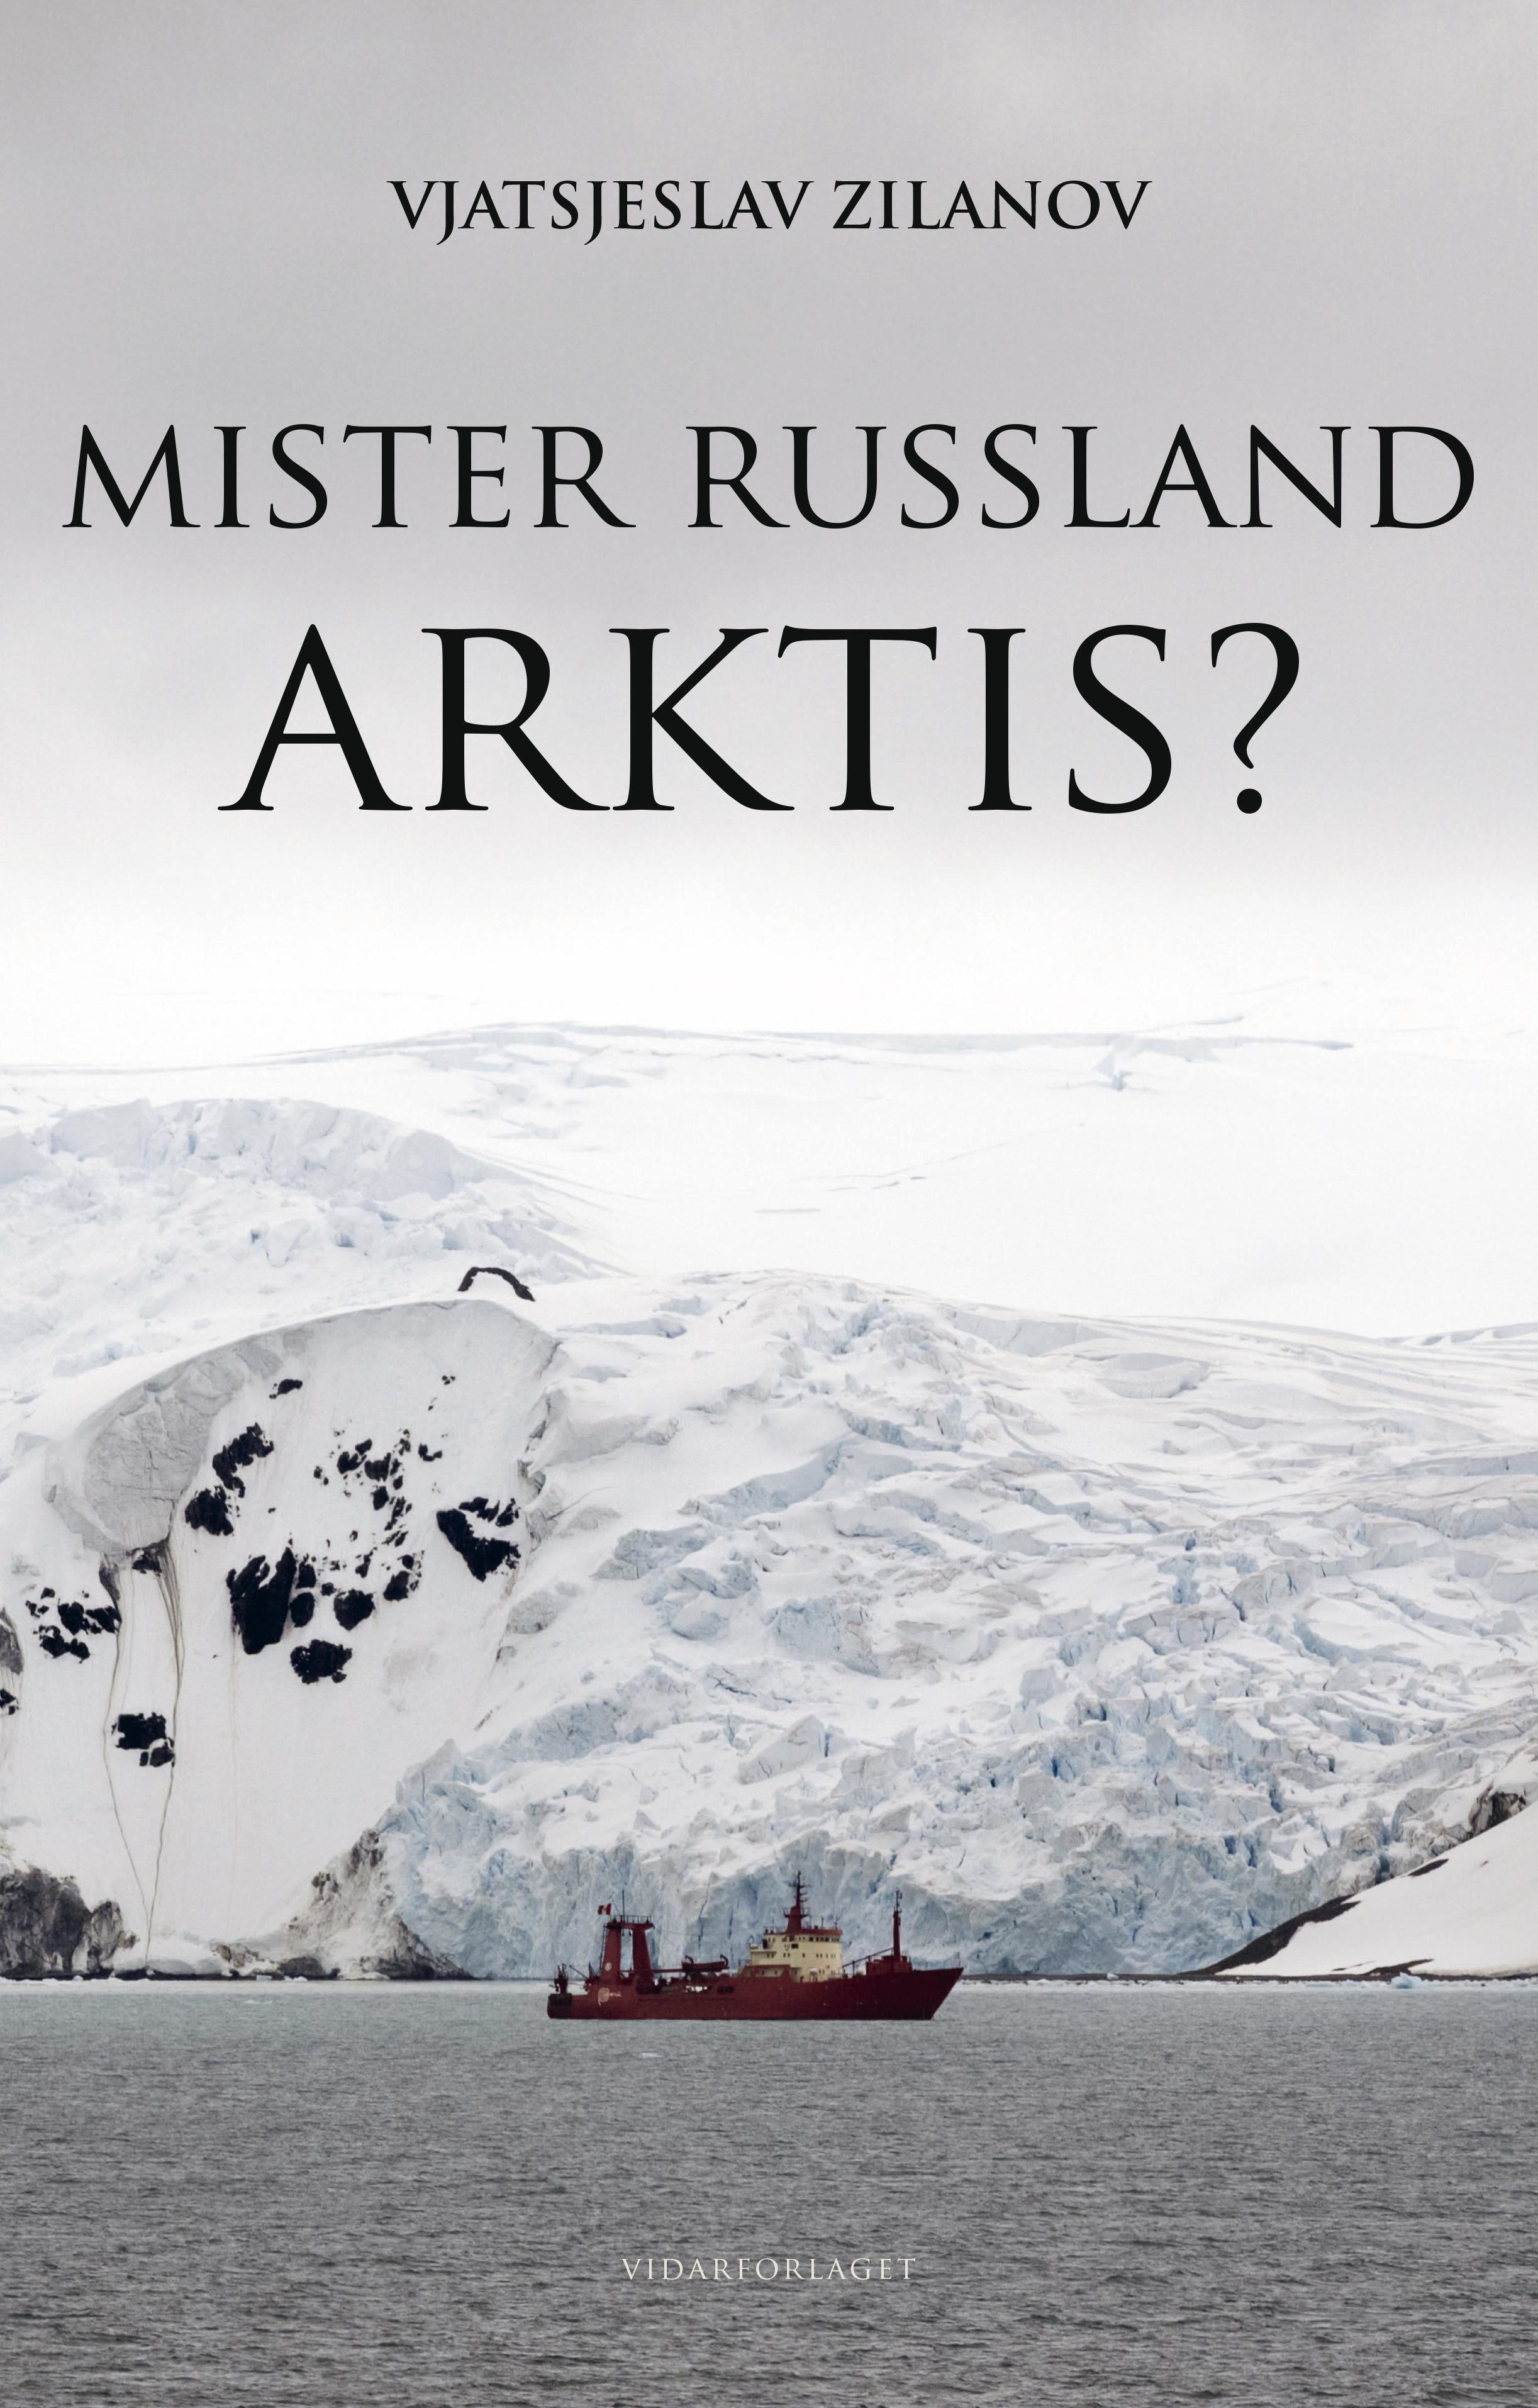 Mister Russland Arktis?